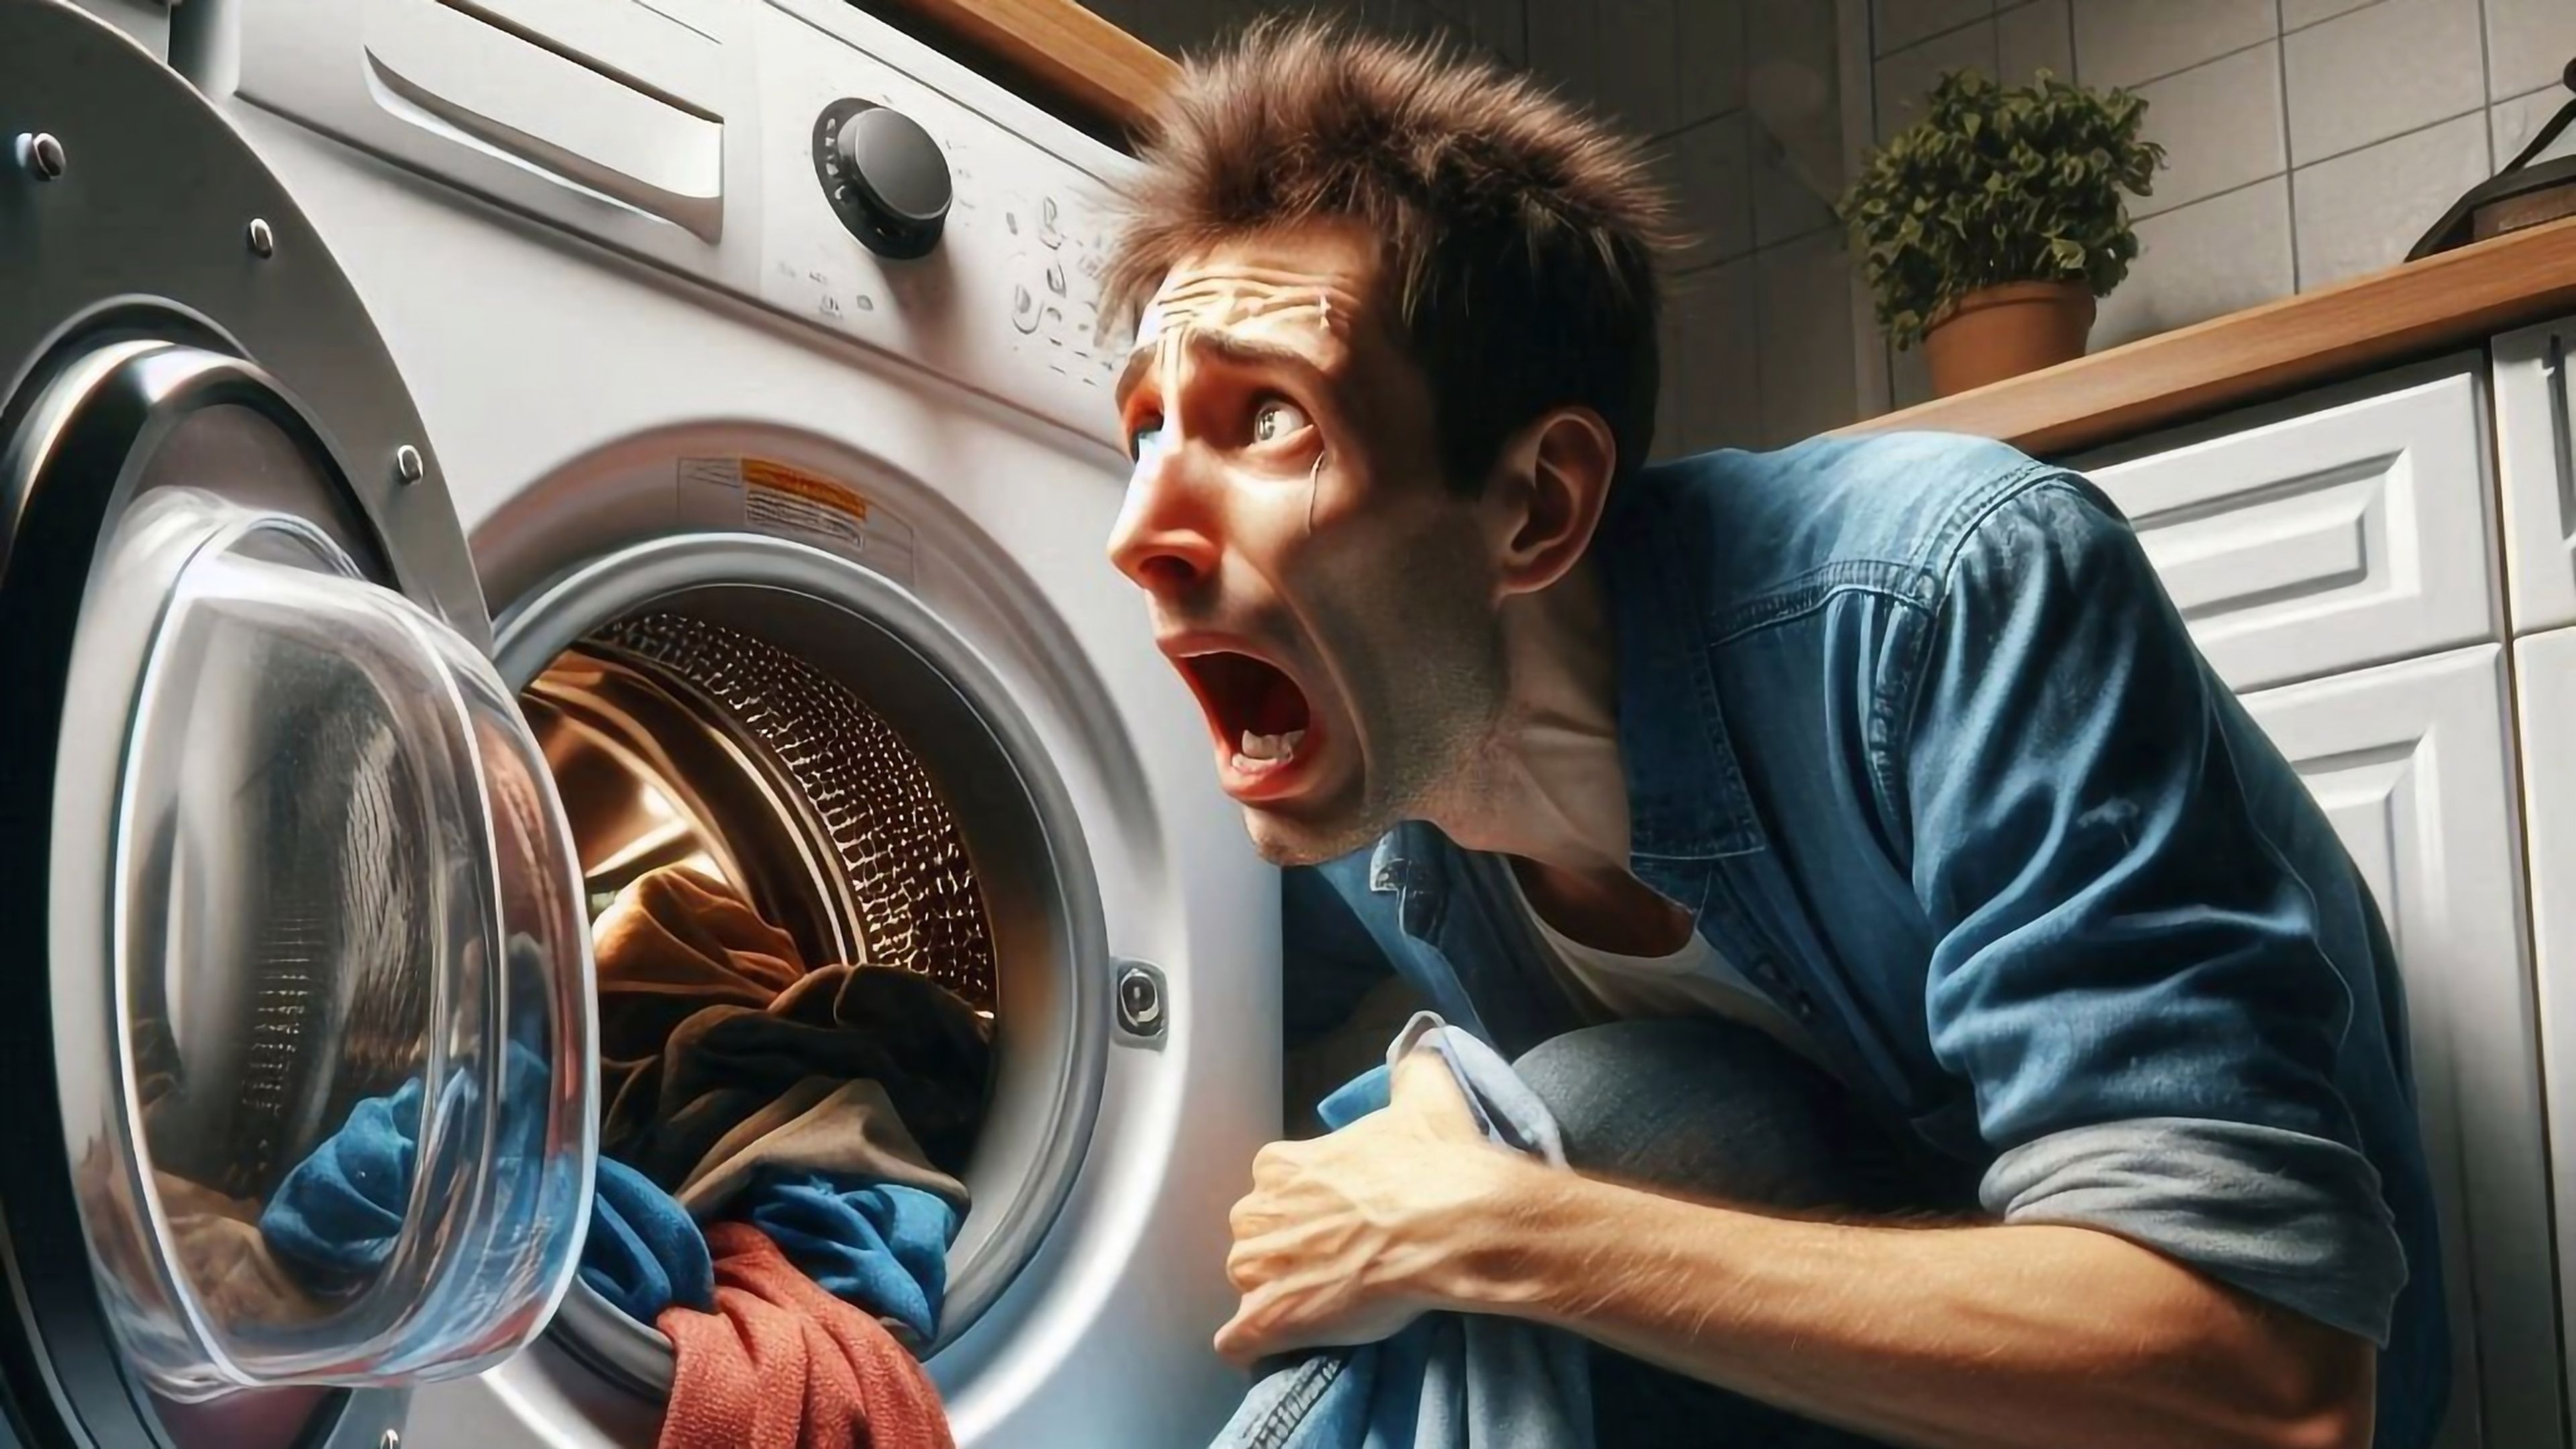 Pánico en la lavadora